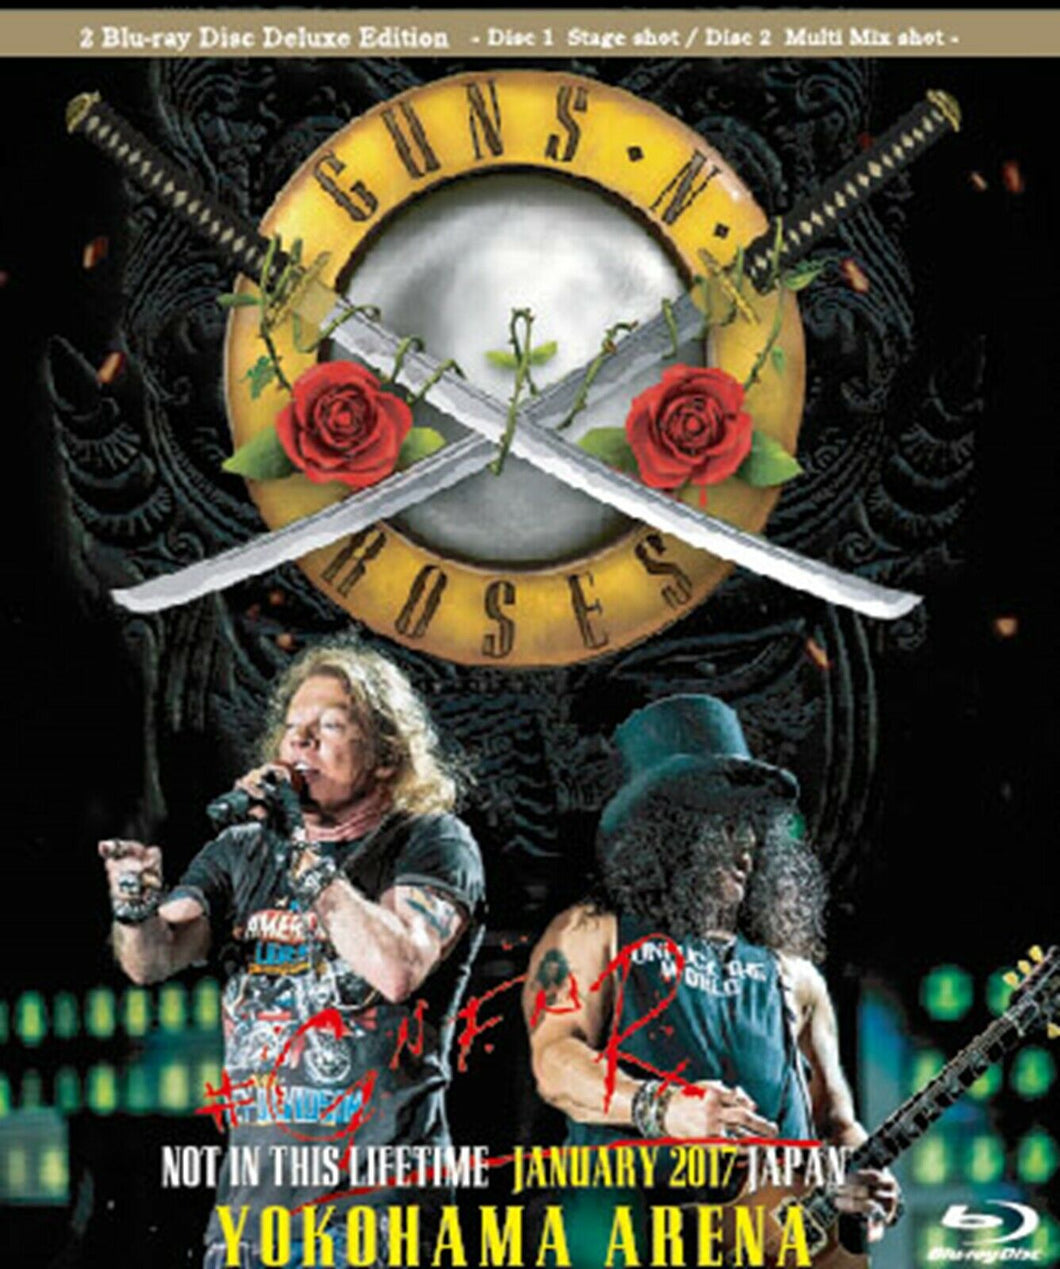 Guns N' Roses Yokohama Arena 2017 Blu-ray 2 Discs 29 Tracks 2BDR